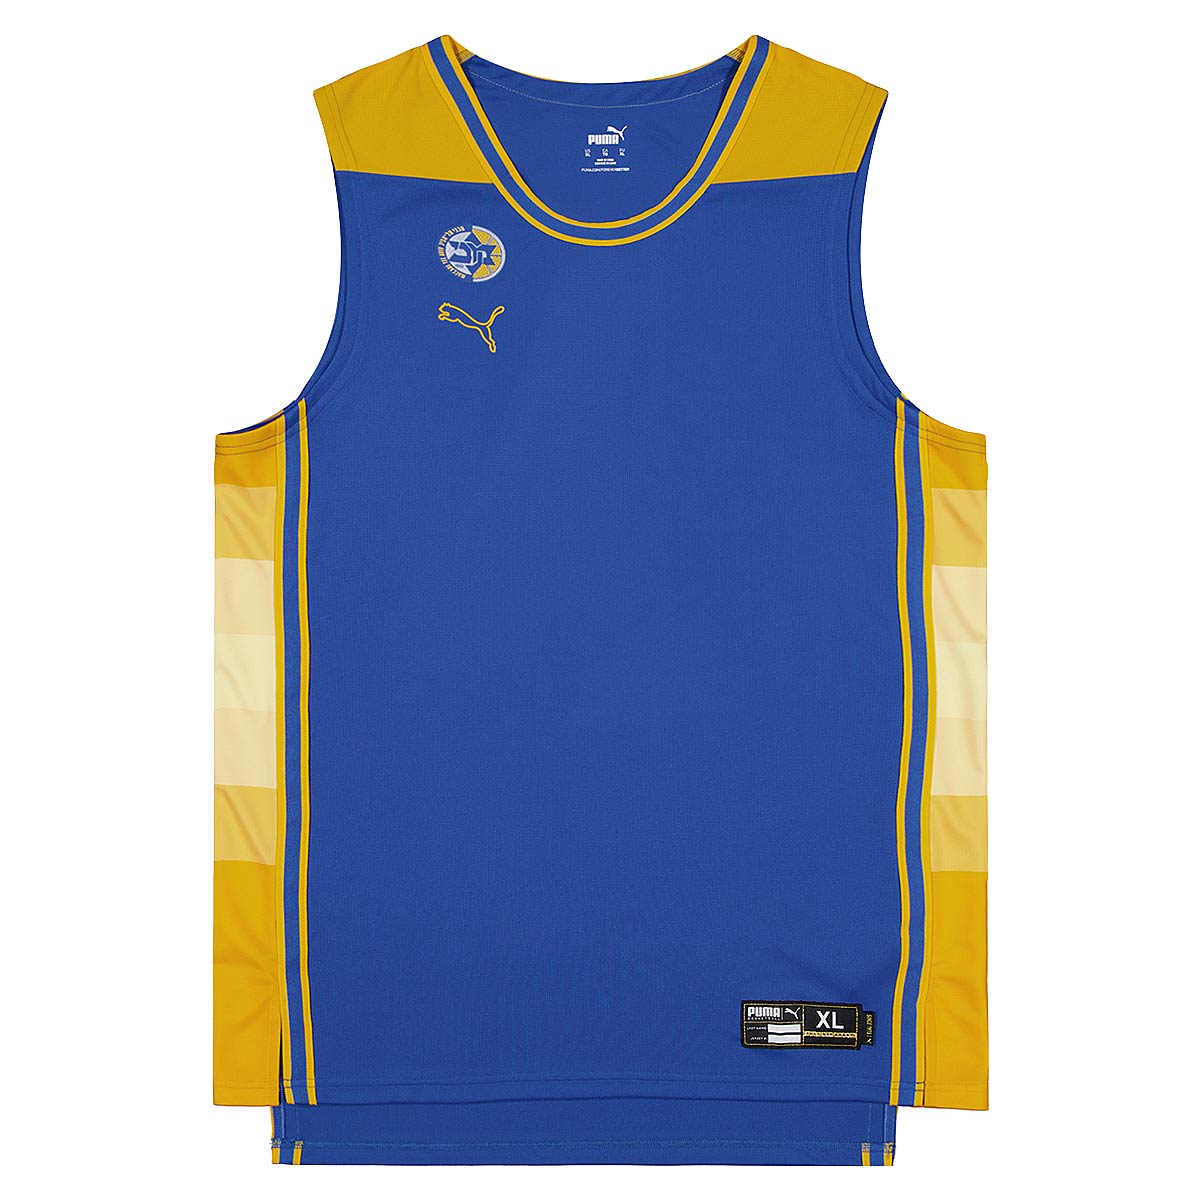 Puma Maccabi Tel Aviv Basketball Game Jersey, Nautical Blau XL